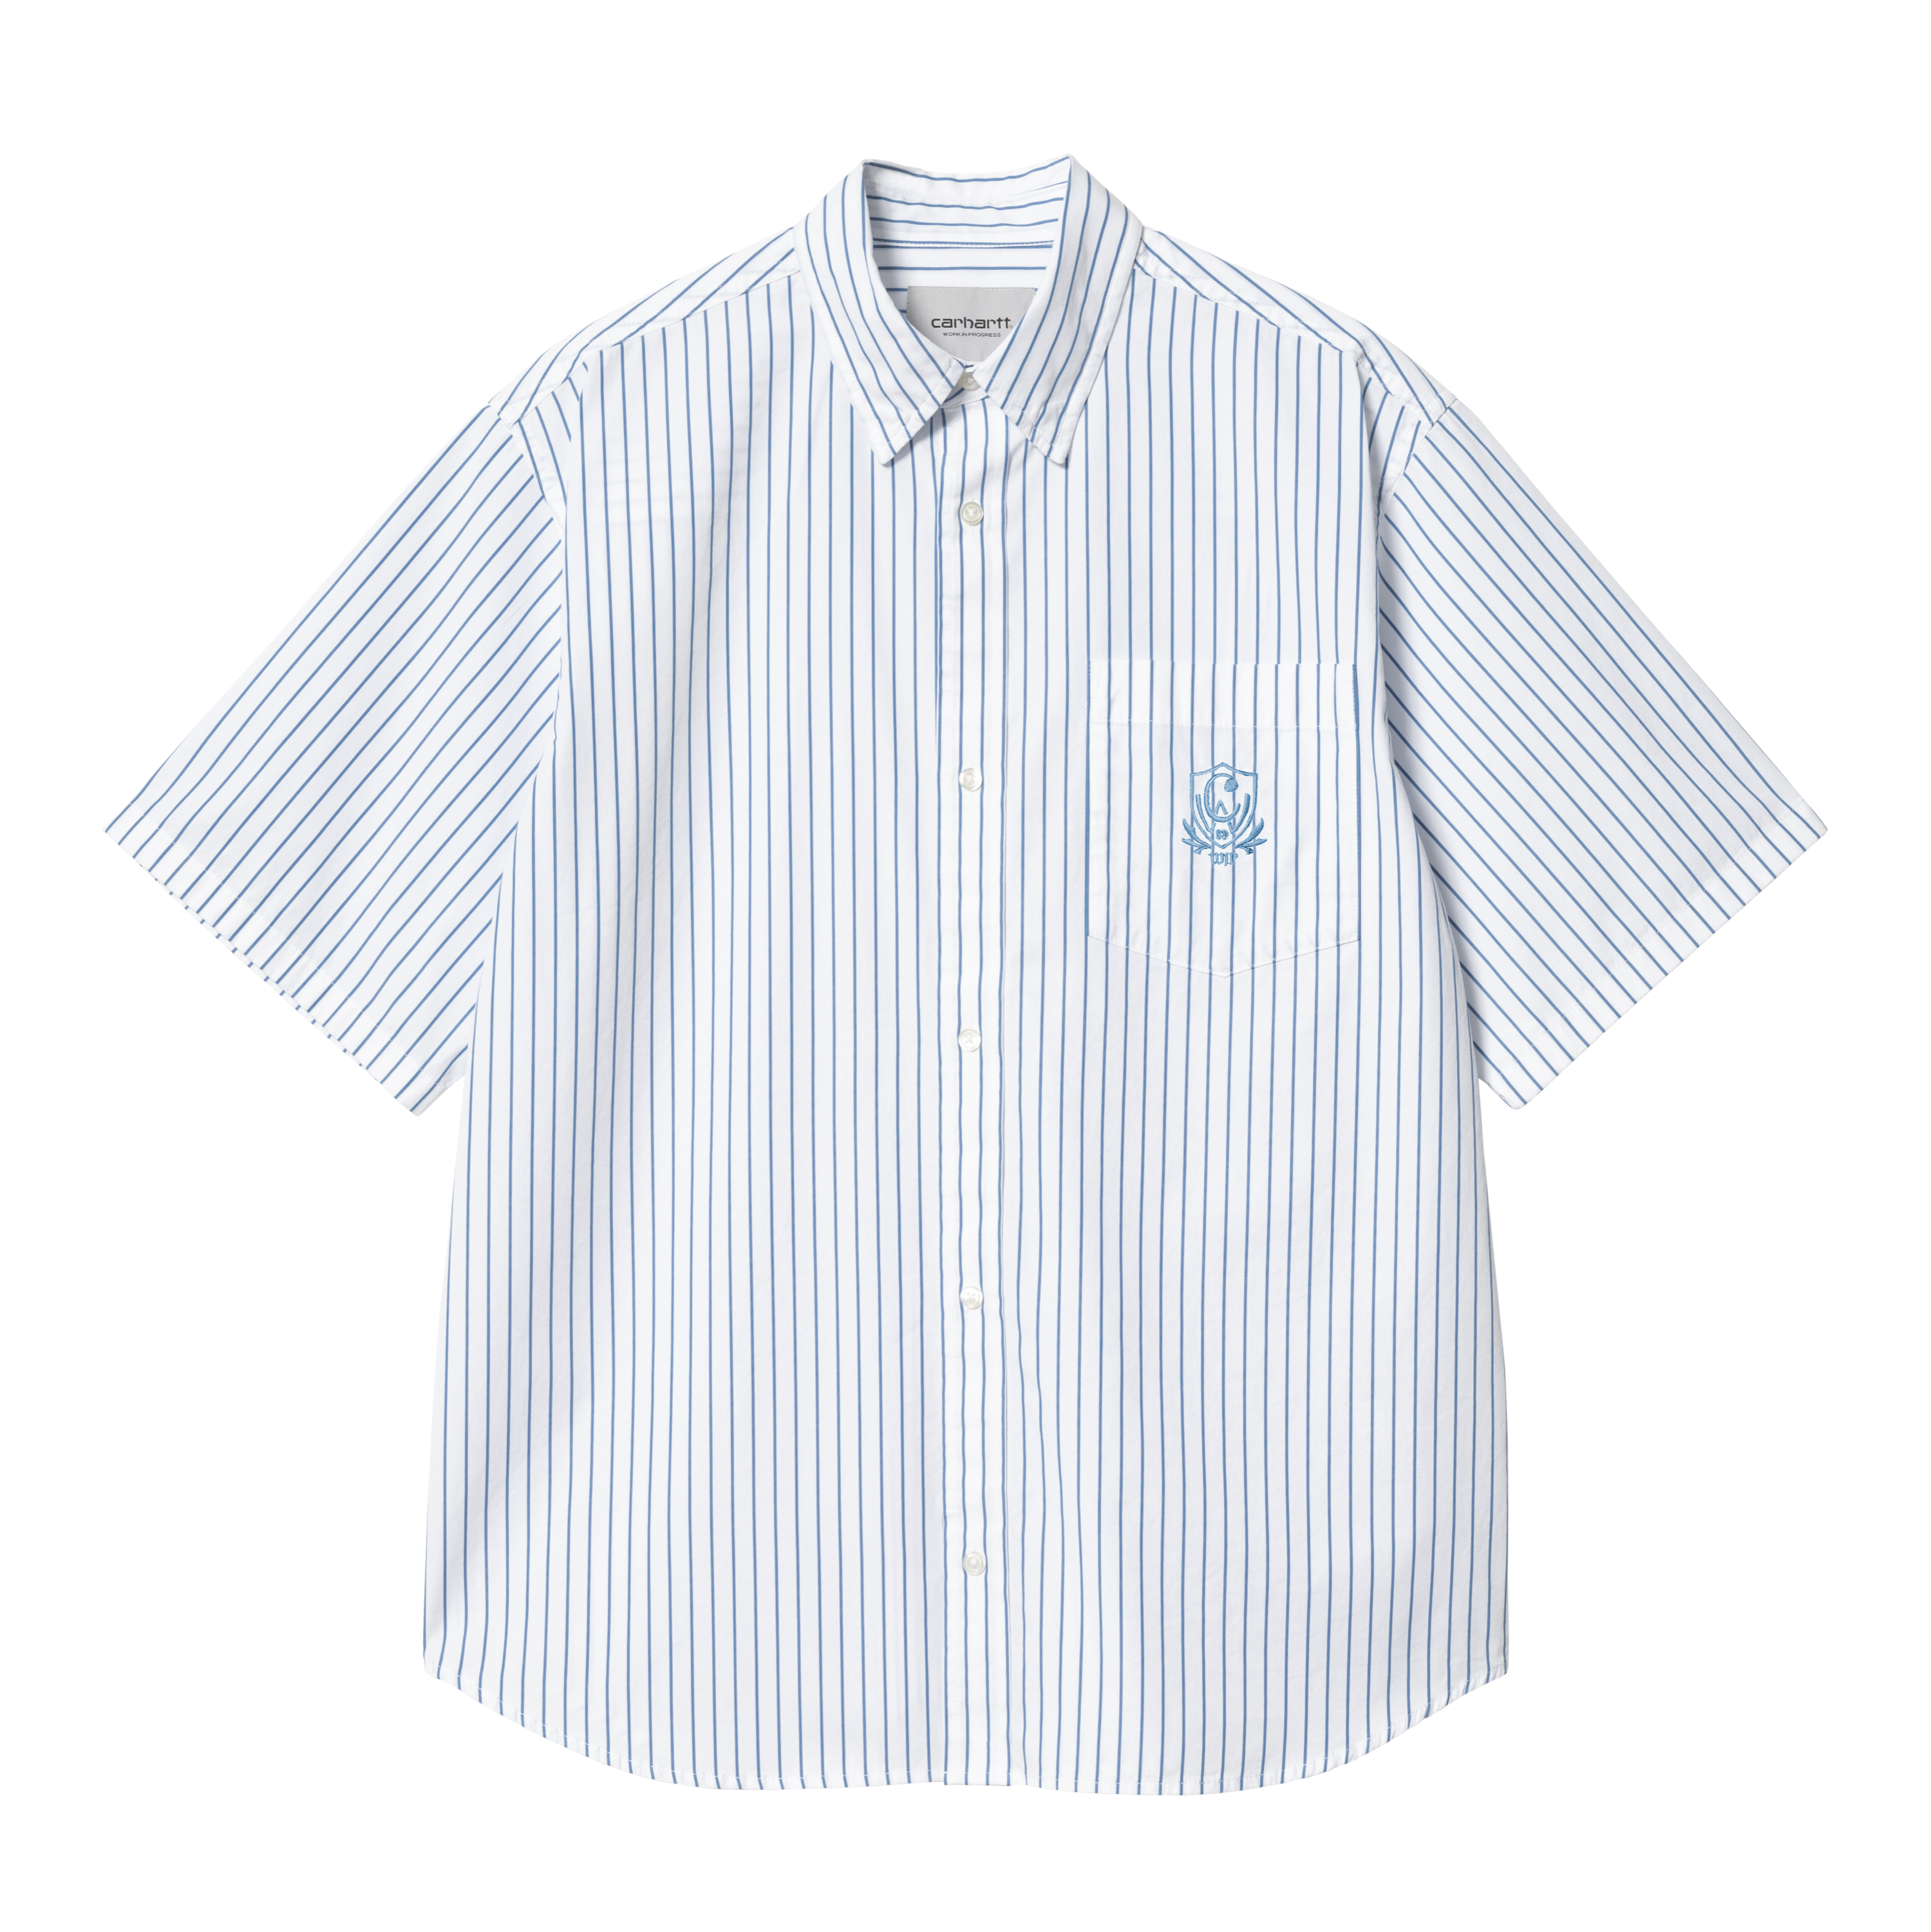 Carhartt WIP Short Sleeve Linus Shirt in White